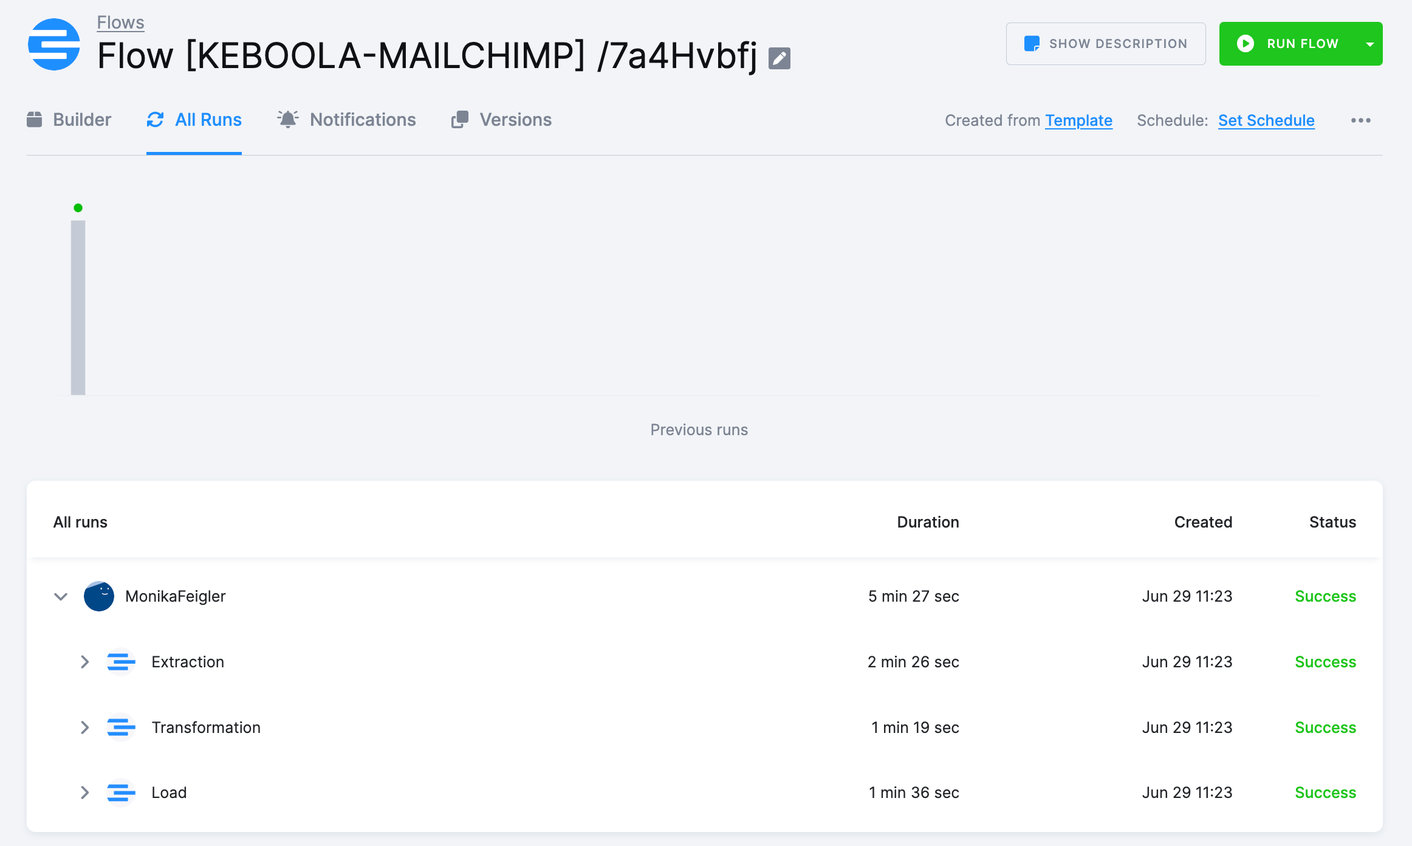 MailChimp - Flows